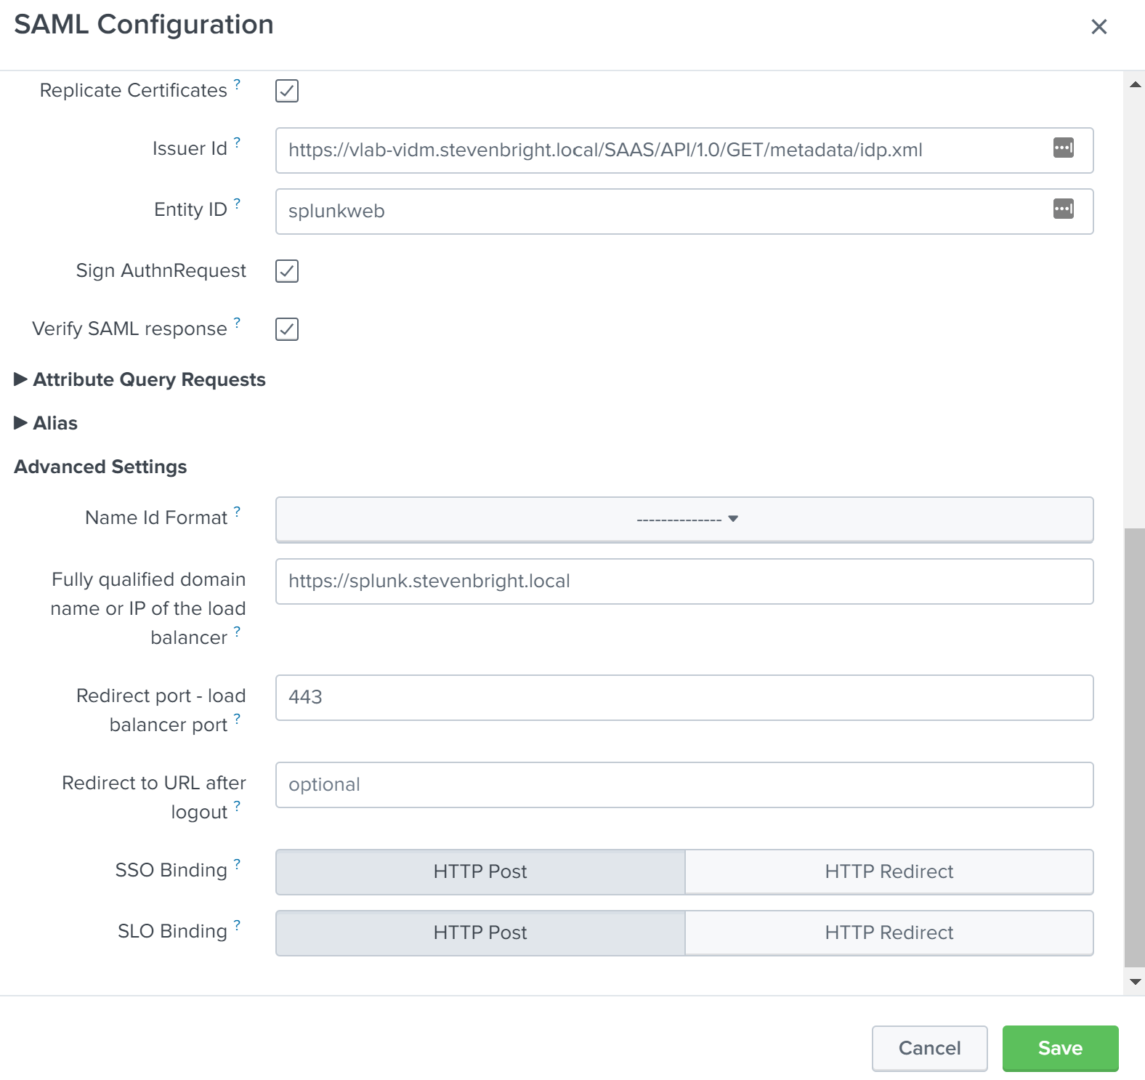 Splunk Enterprise SAML Configuration with Additional Values Filled